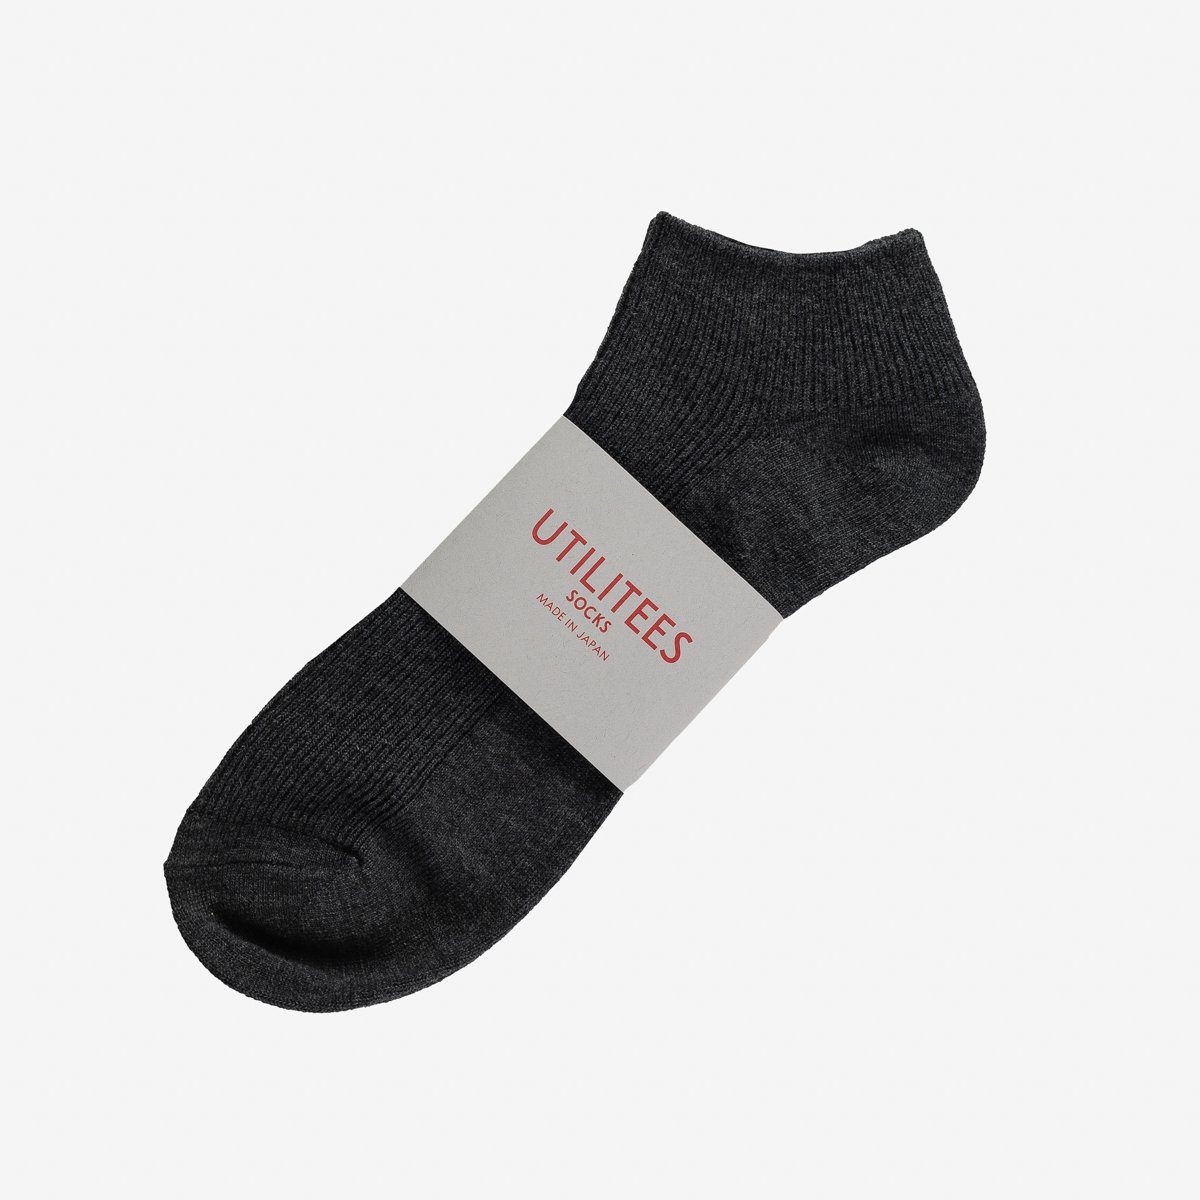 UTSS-CGR UTILITEES Mixed Cotton Sneaker Socks - Charcoal Grey - 2